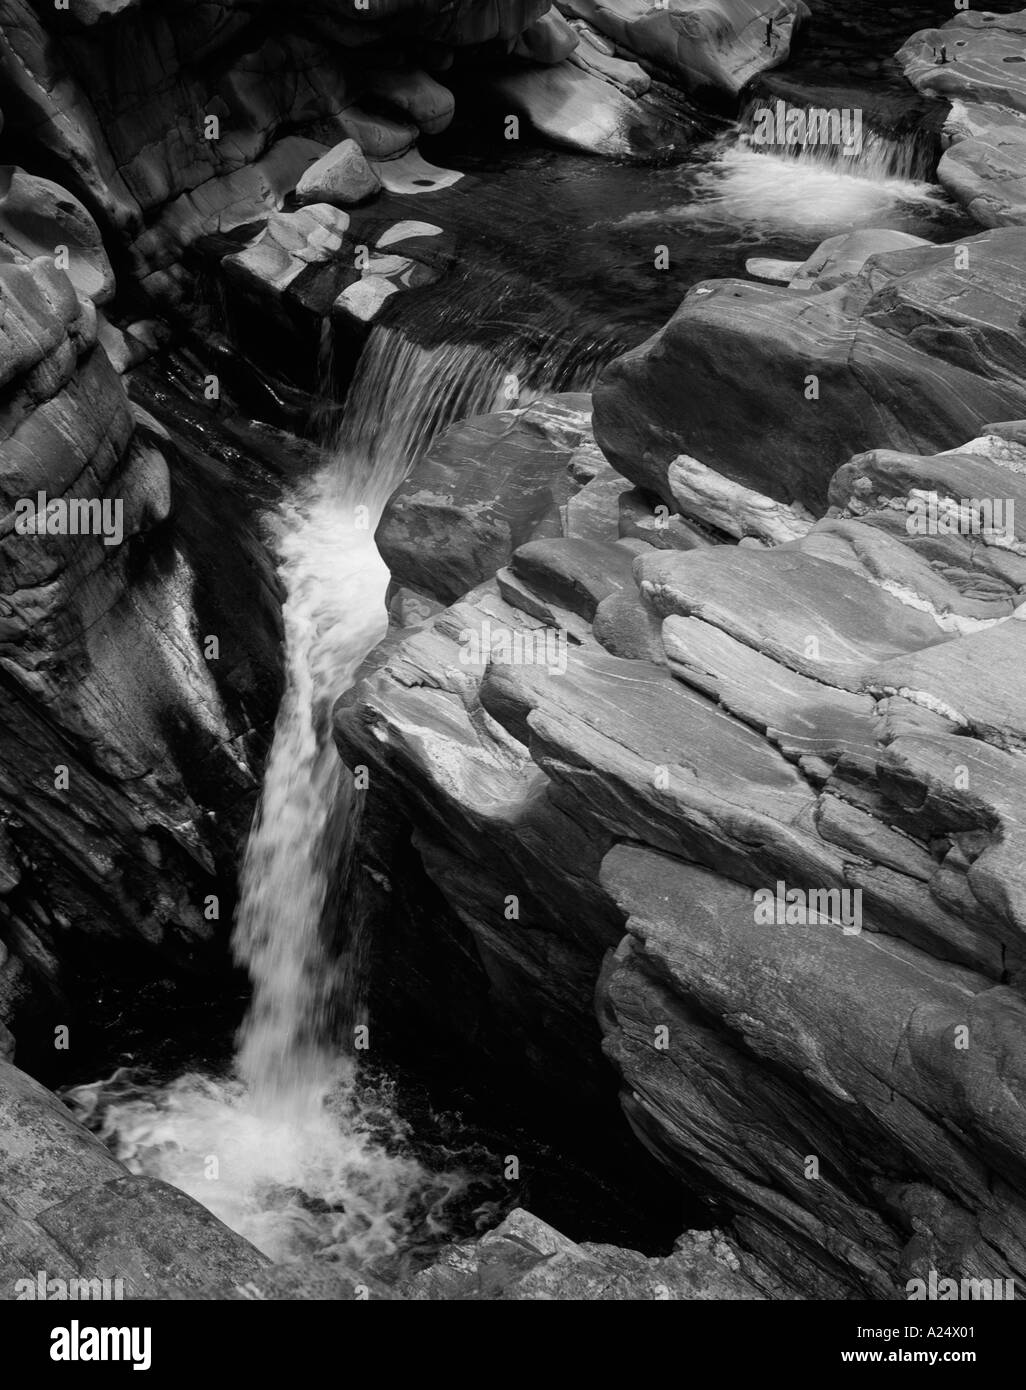 Waterfall, winding river between steep eroded rocks Stock Photo